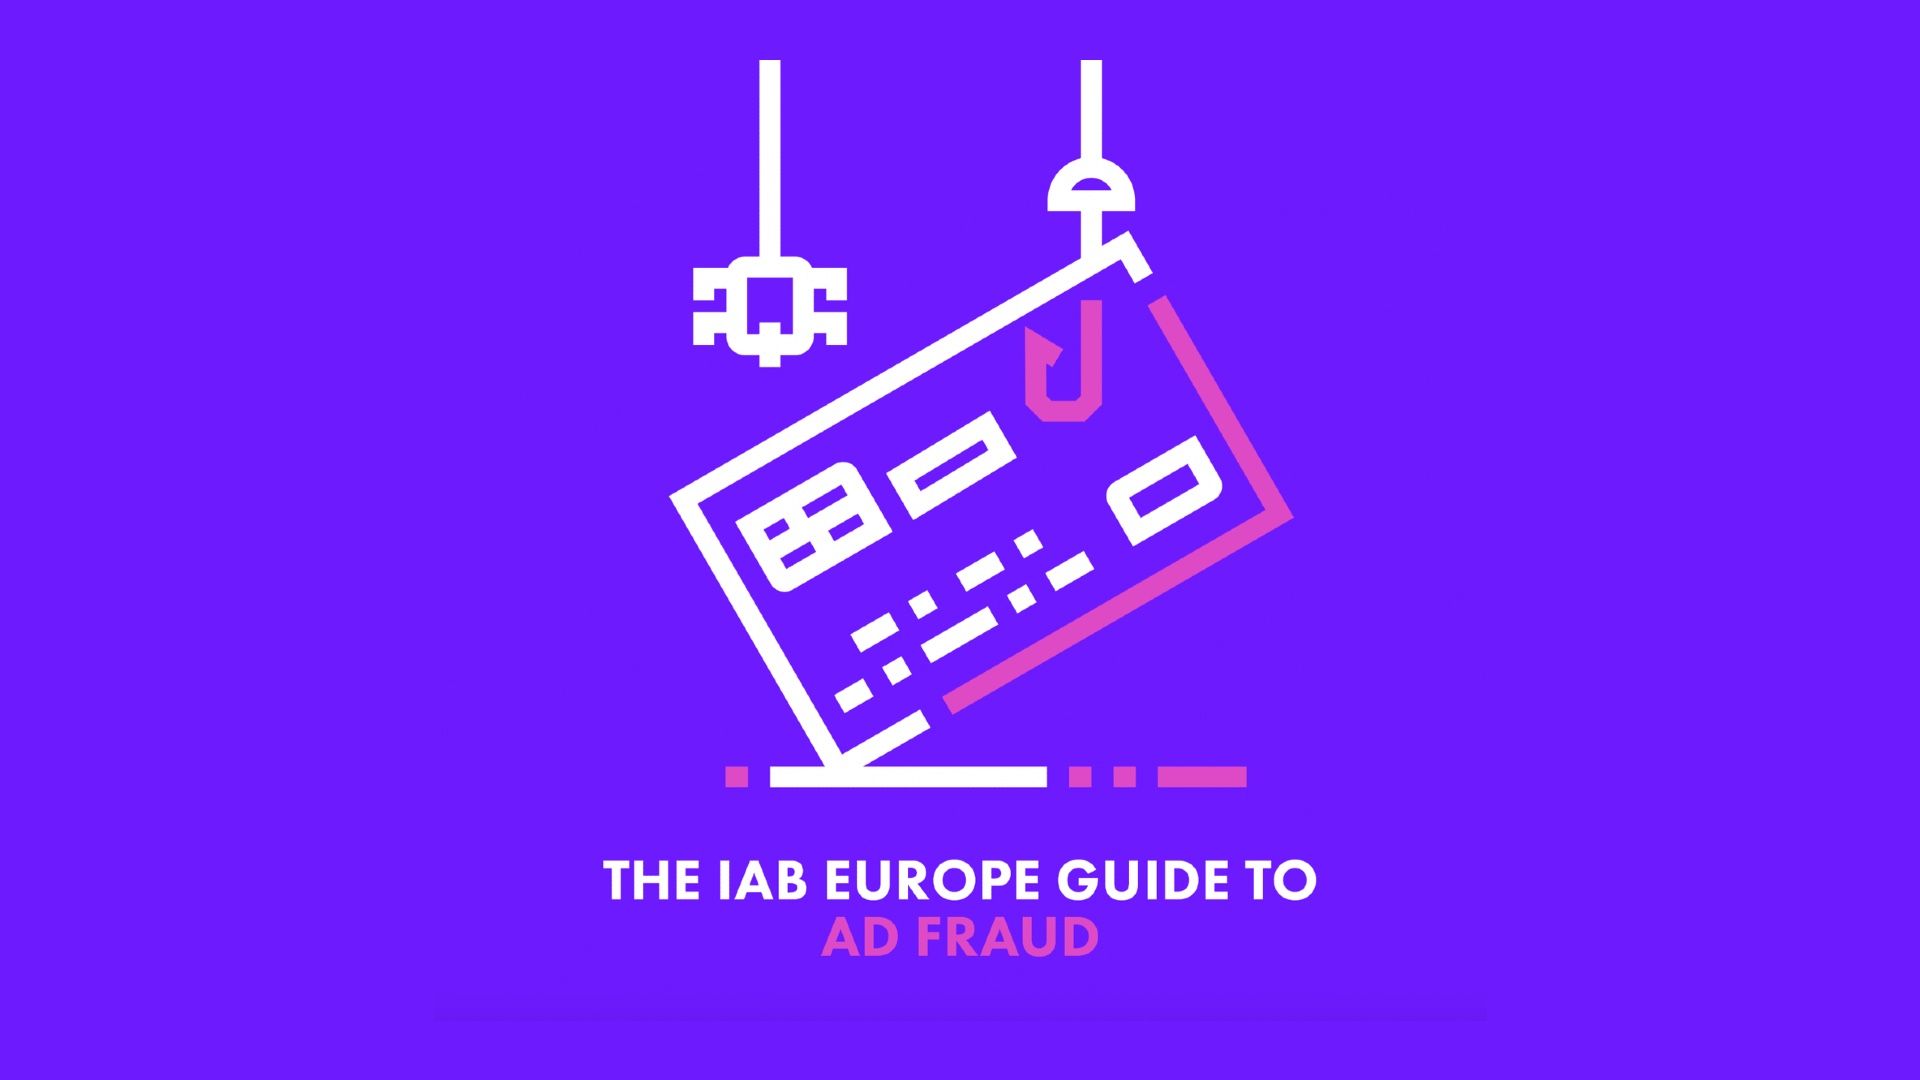 IAB Europe considers Traffic Acquisition Manipulation as Ad Fraud